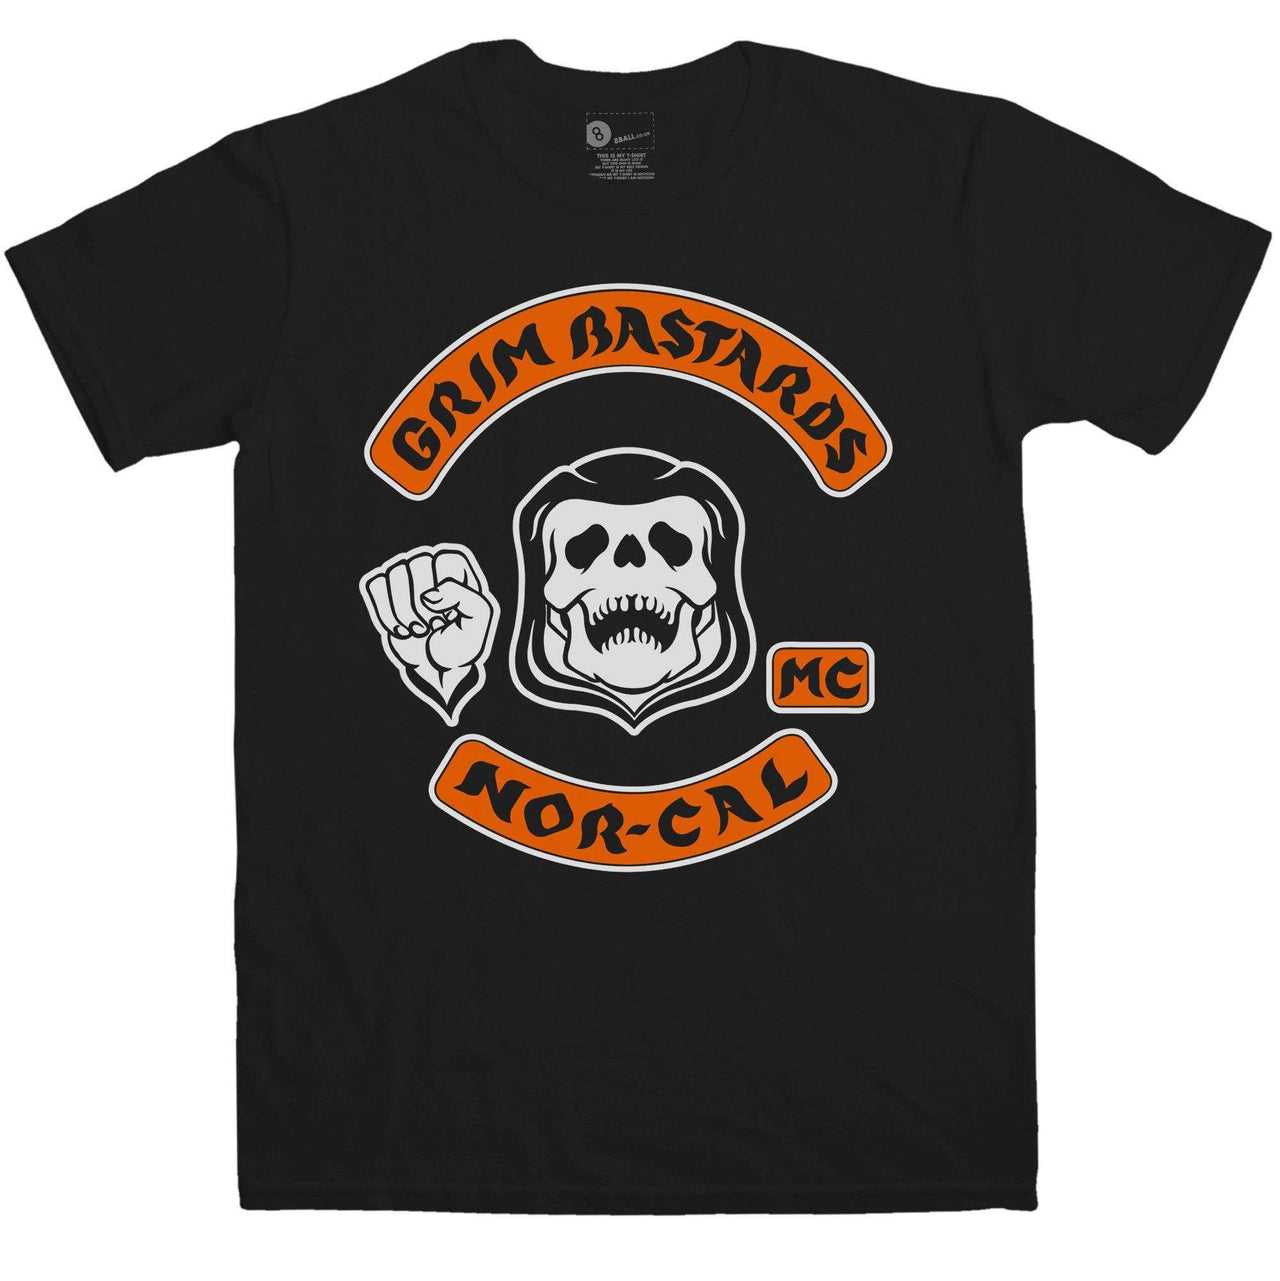 Grim Bastards Graphic T-Shirt For Men 8Ball